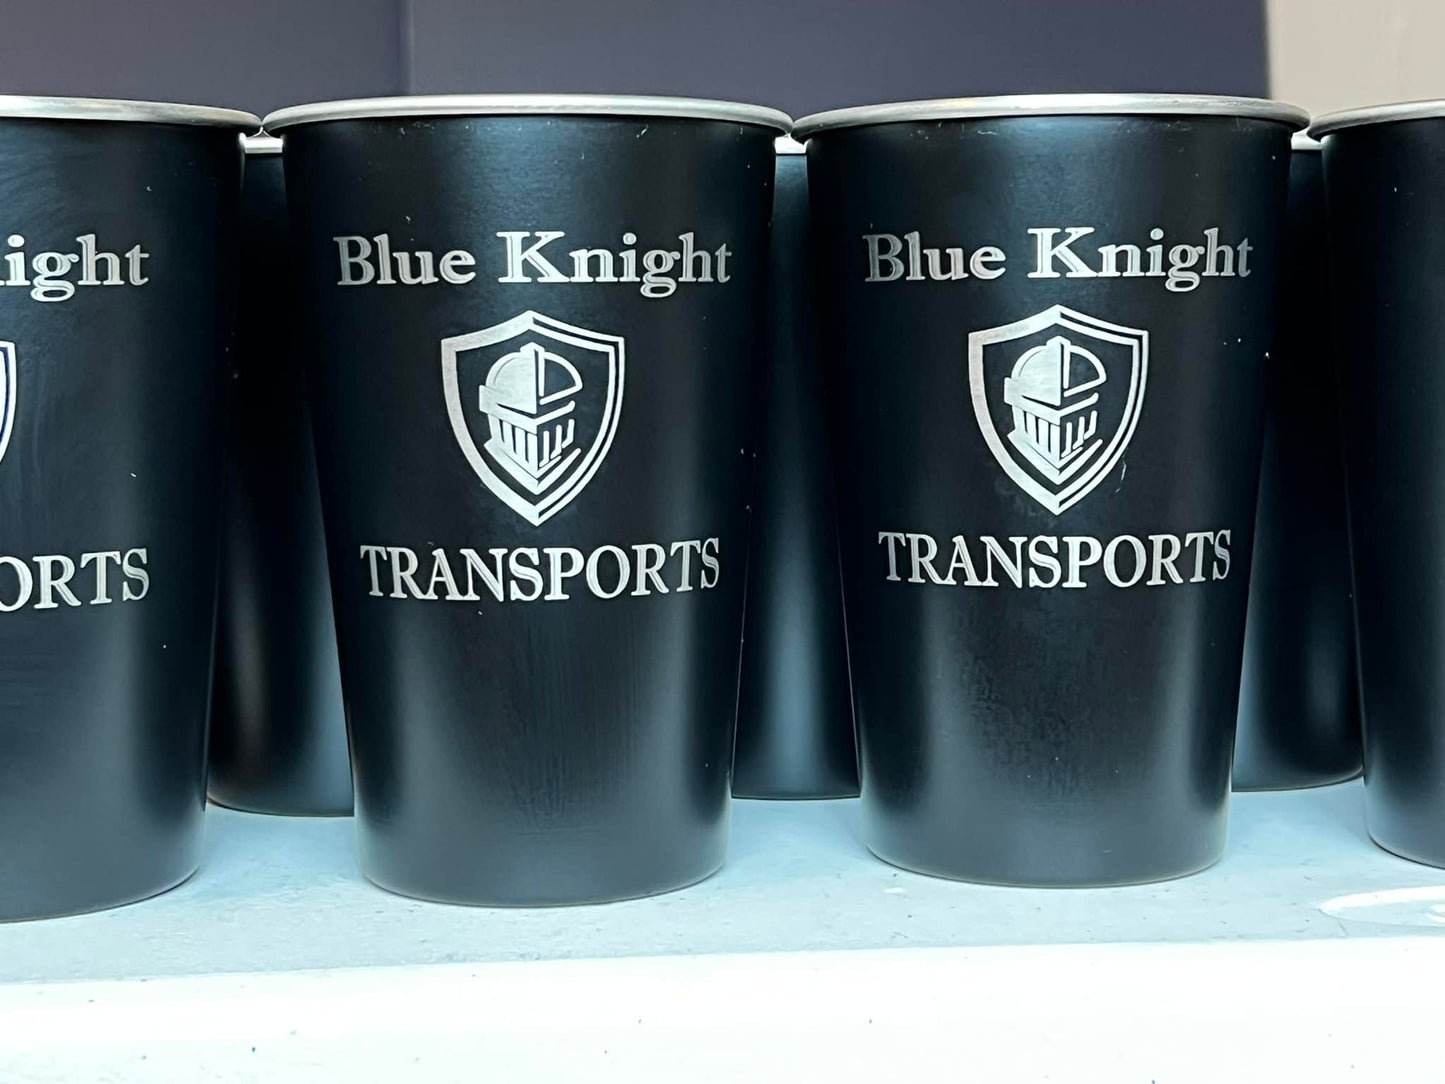 Blue Knight Transports pint glass